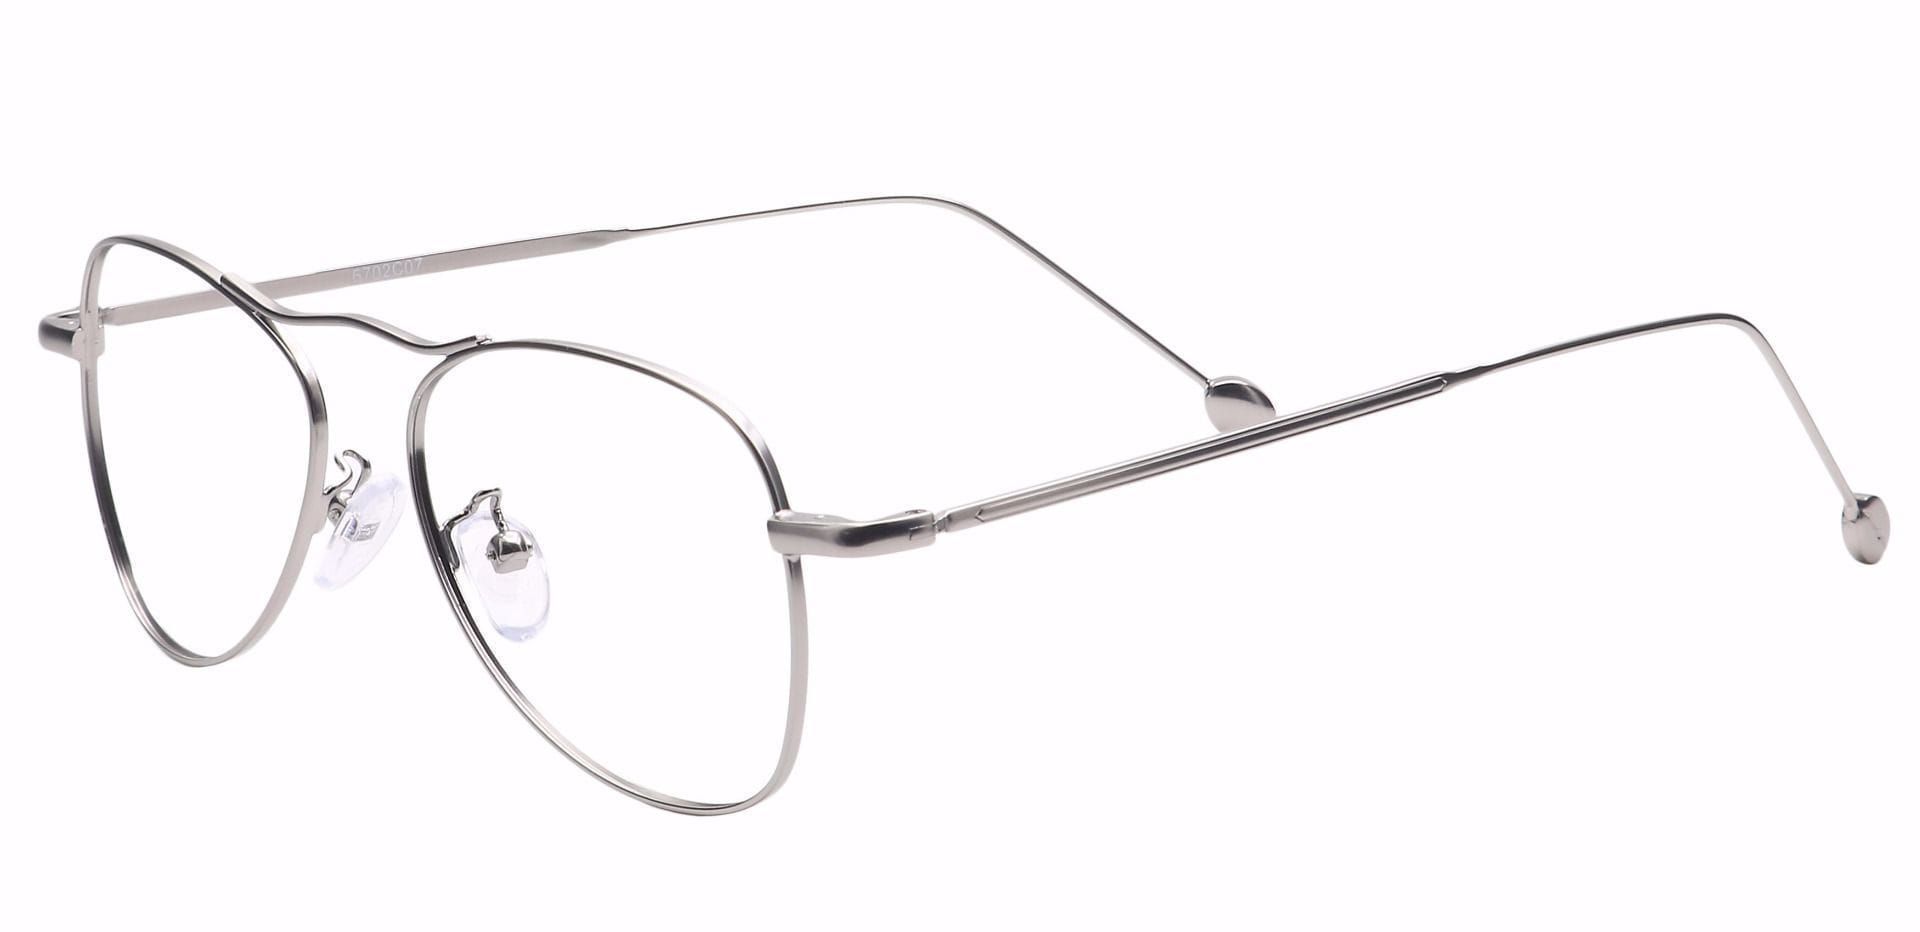 Brio Aviator Lined Bifocal Glasses - Silver